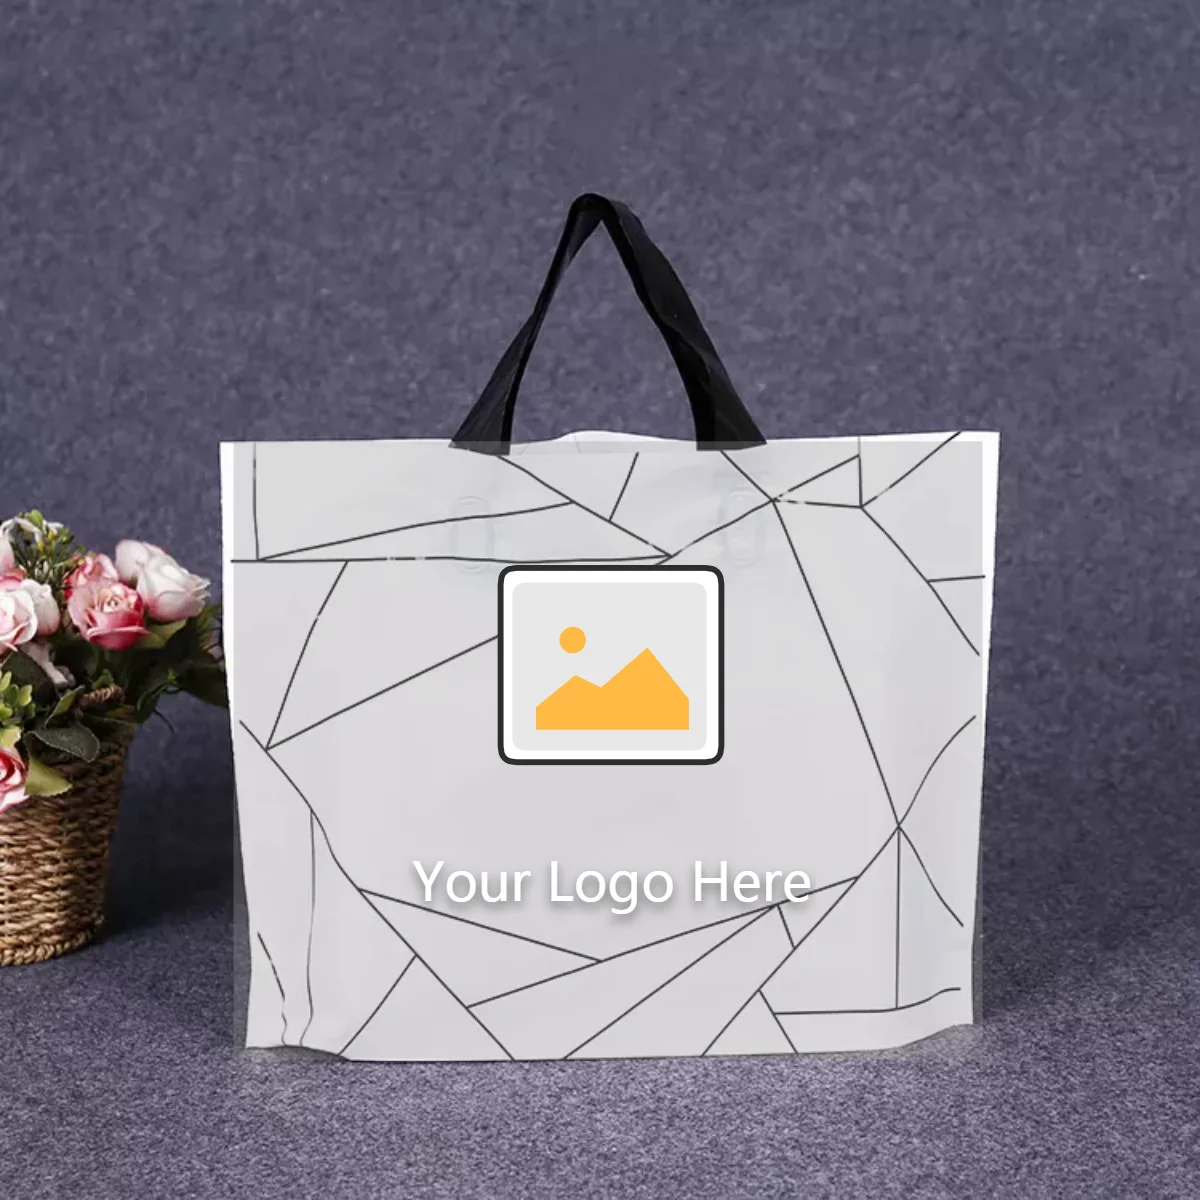 Buy Bulk Plastic Shopping Bags With Handles | Karle Packaging